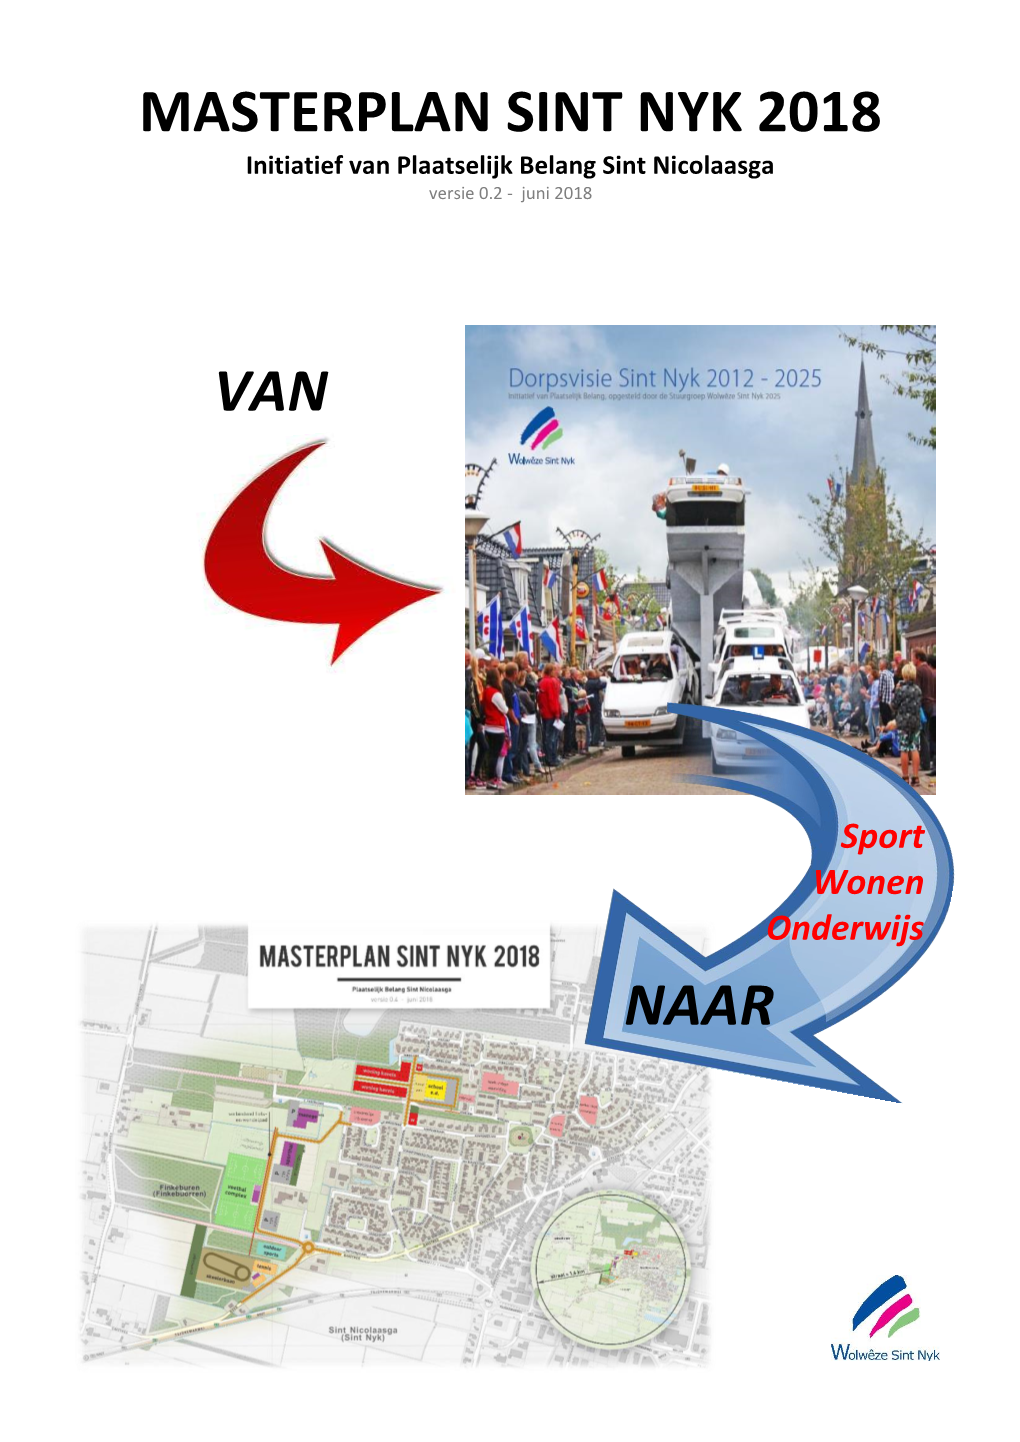 Masterplan Sint Nyk 2018 Van Naar